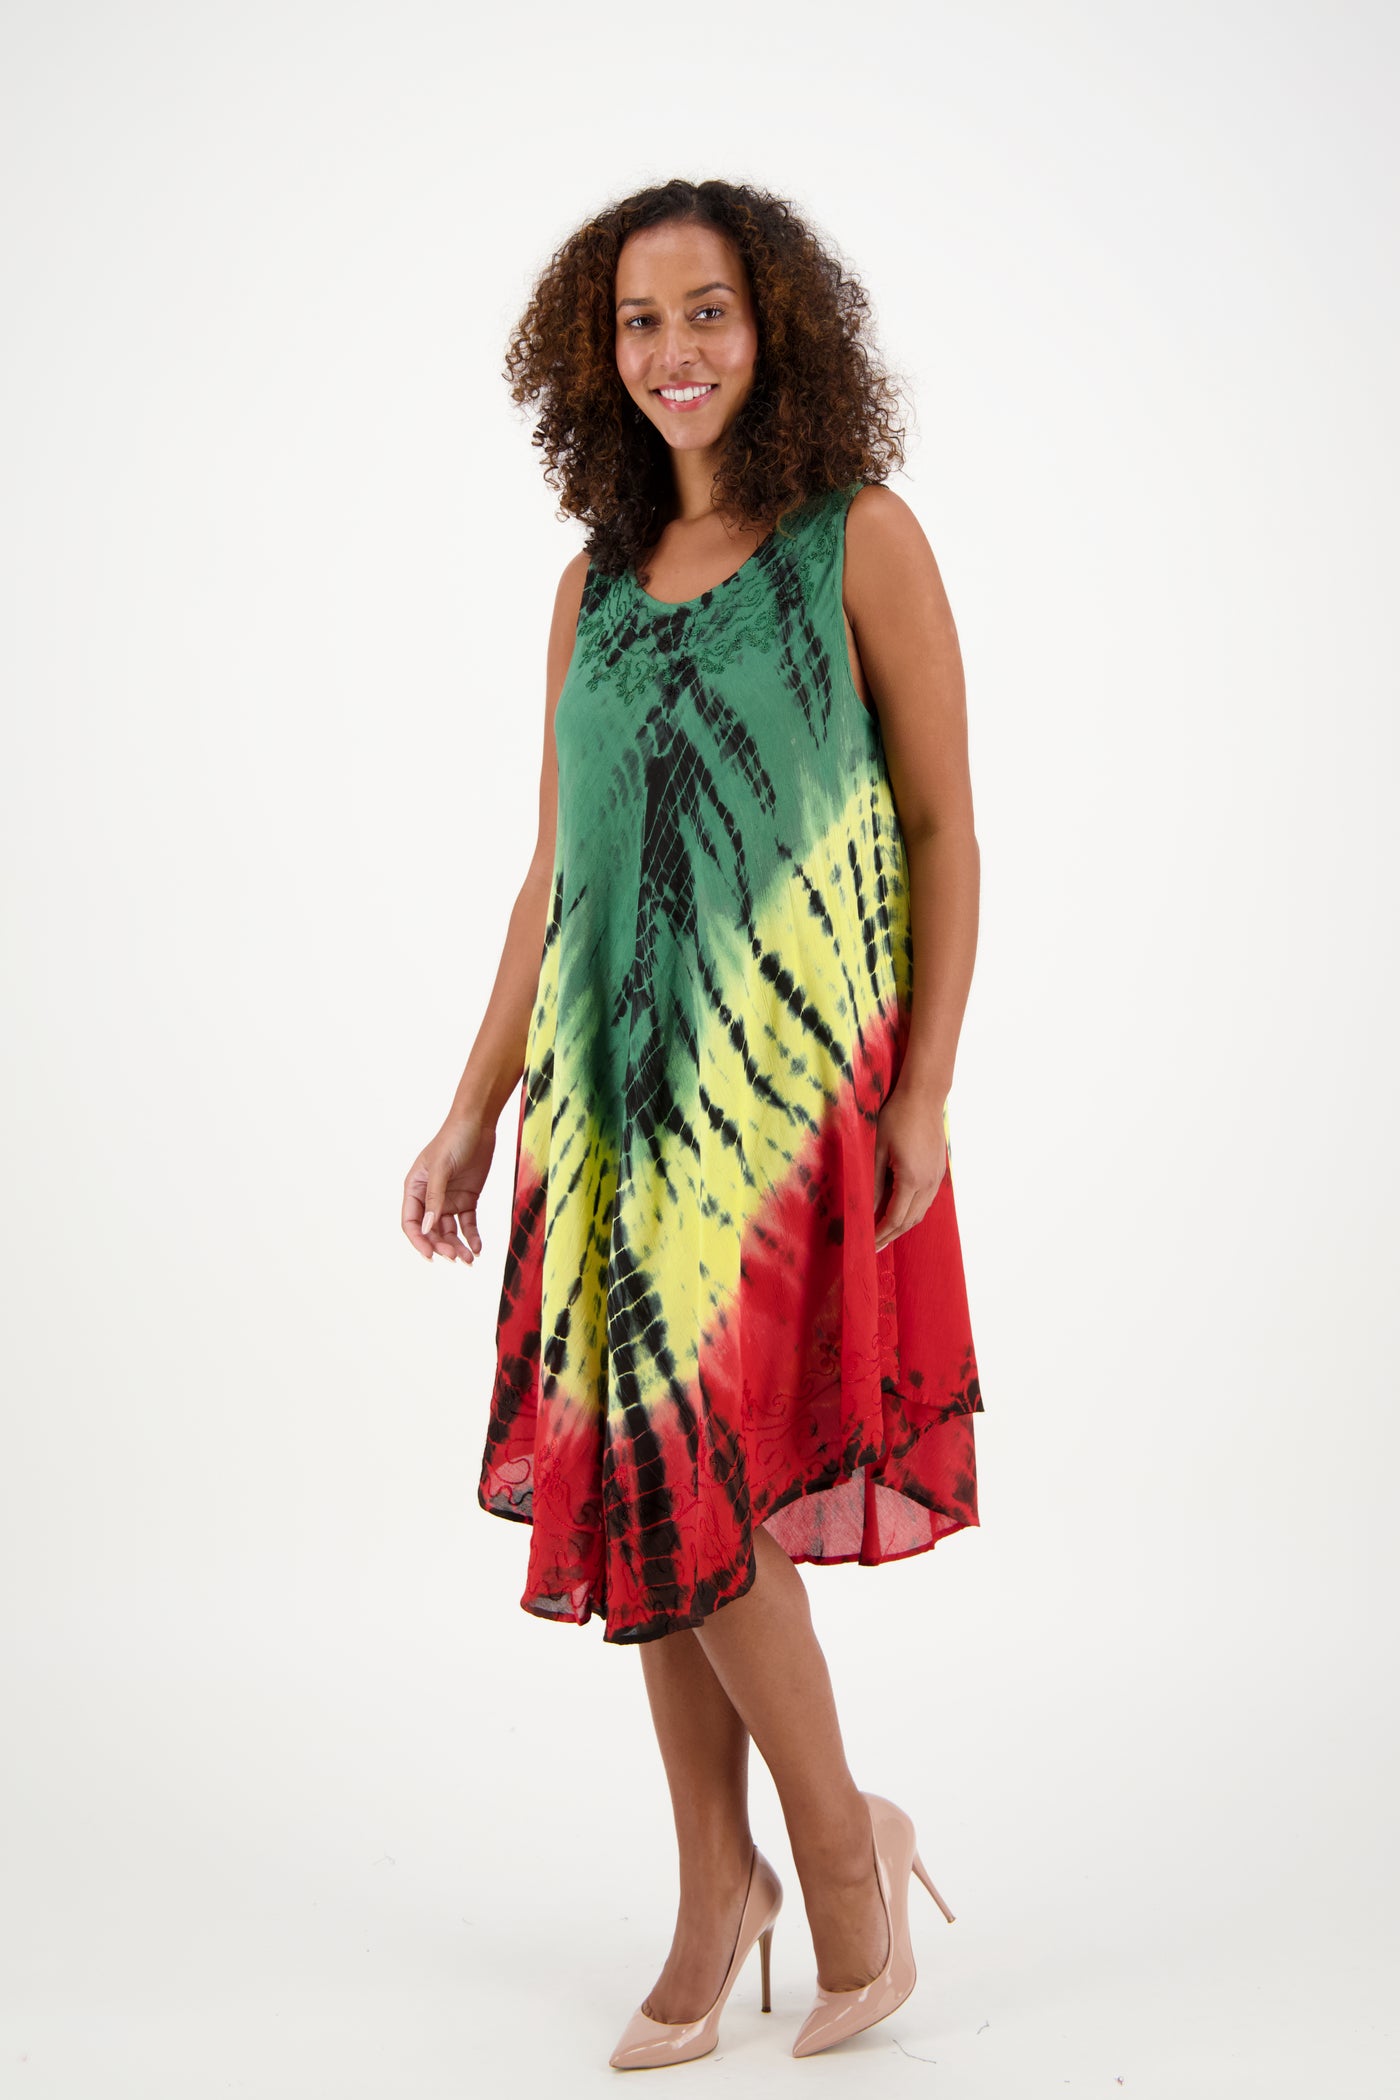 Rasta Inspired House Dress One Size 22151 - Advance Apparels Inc